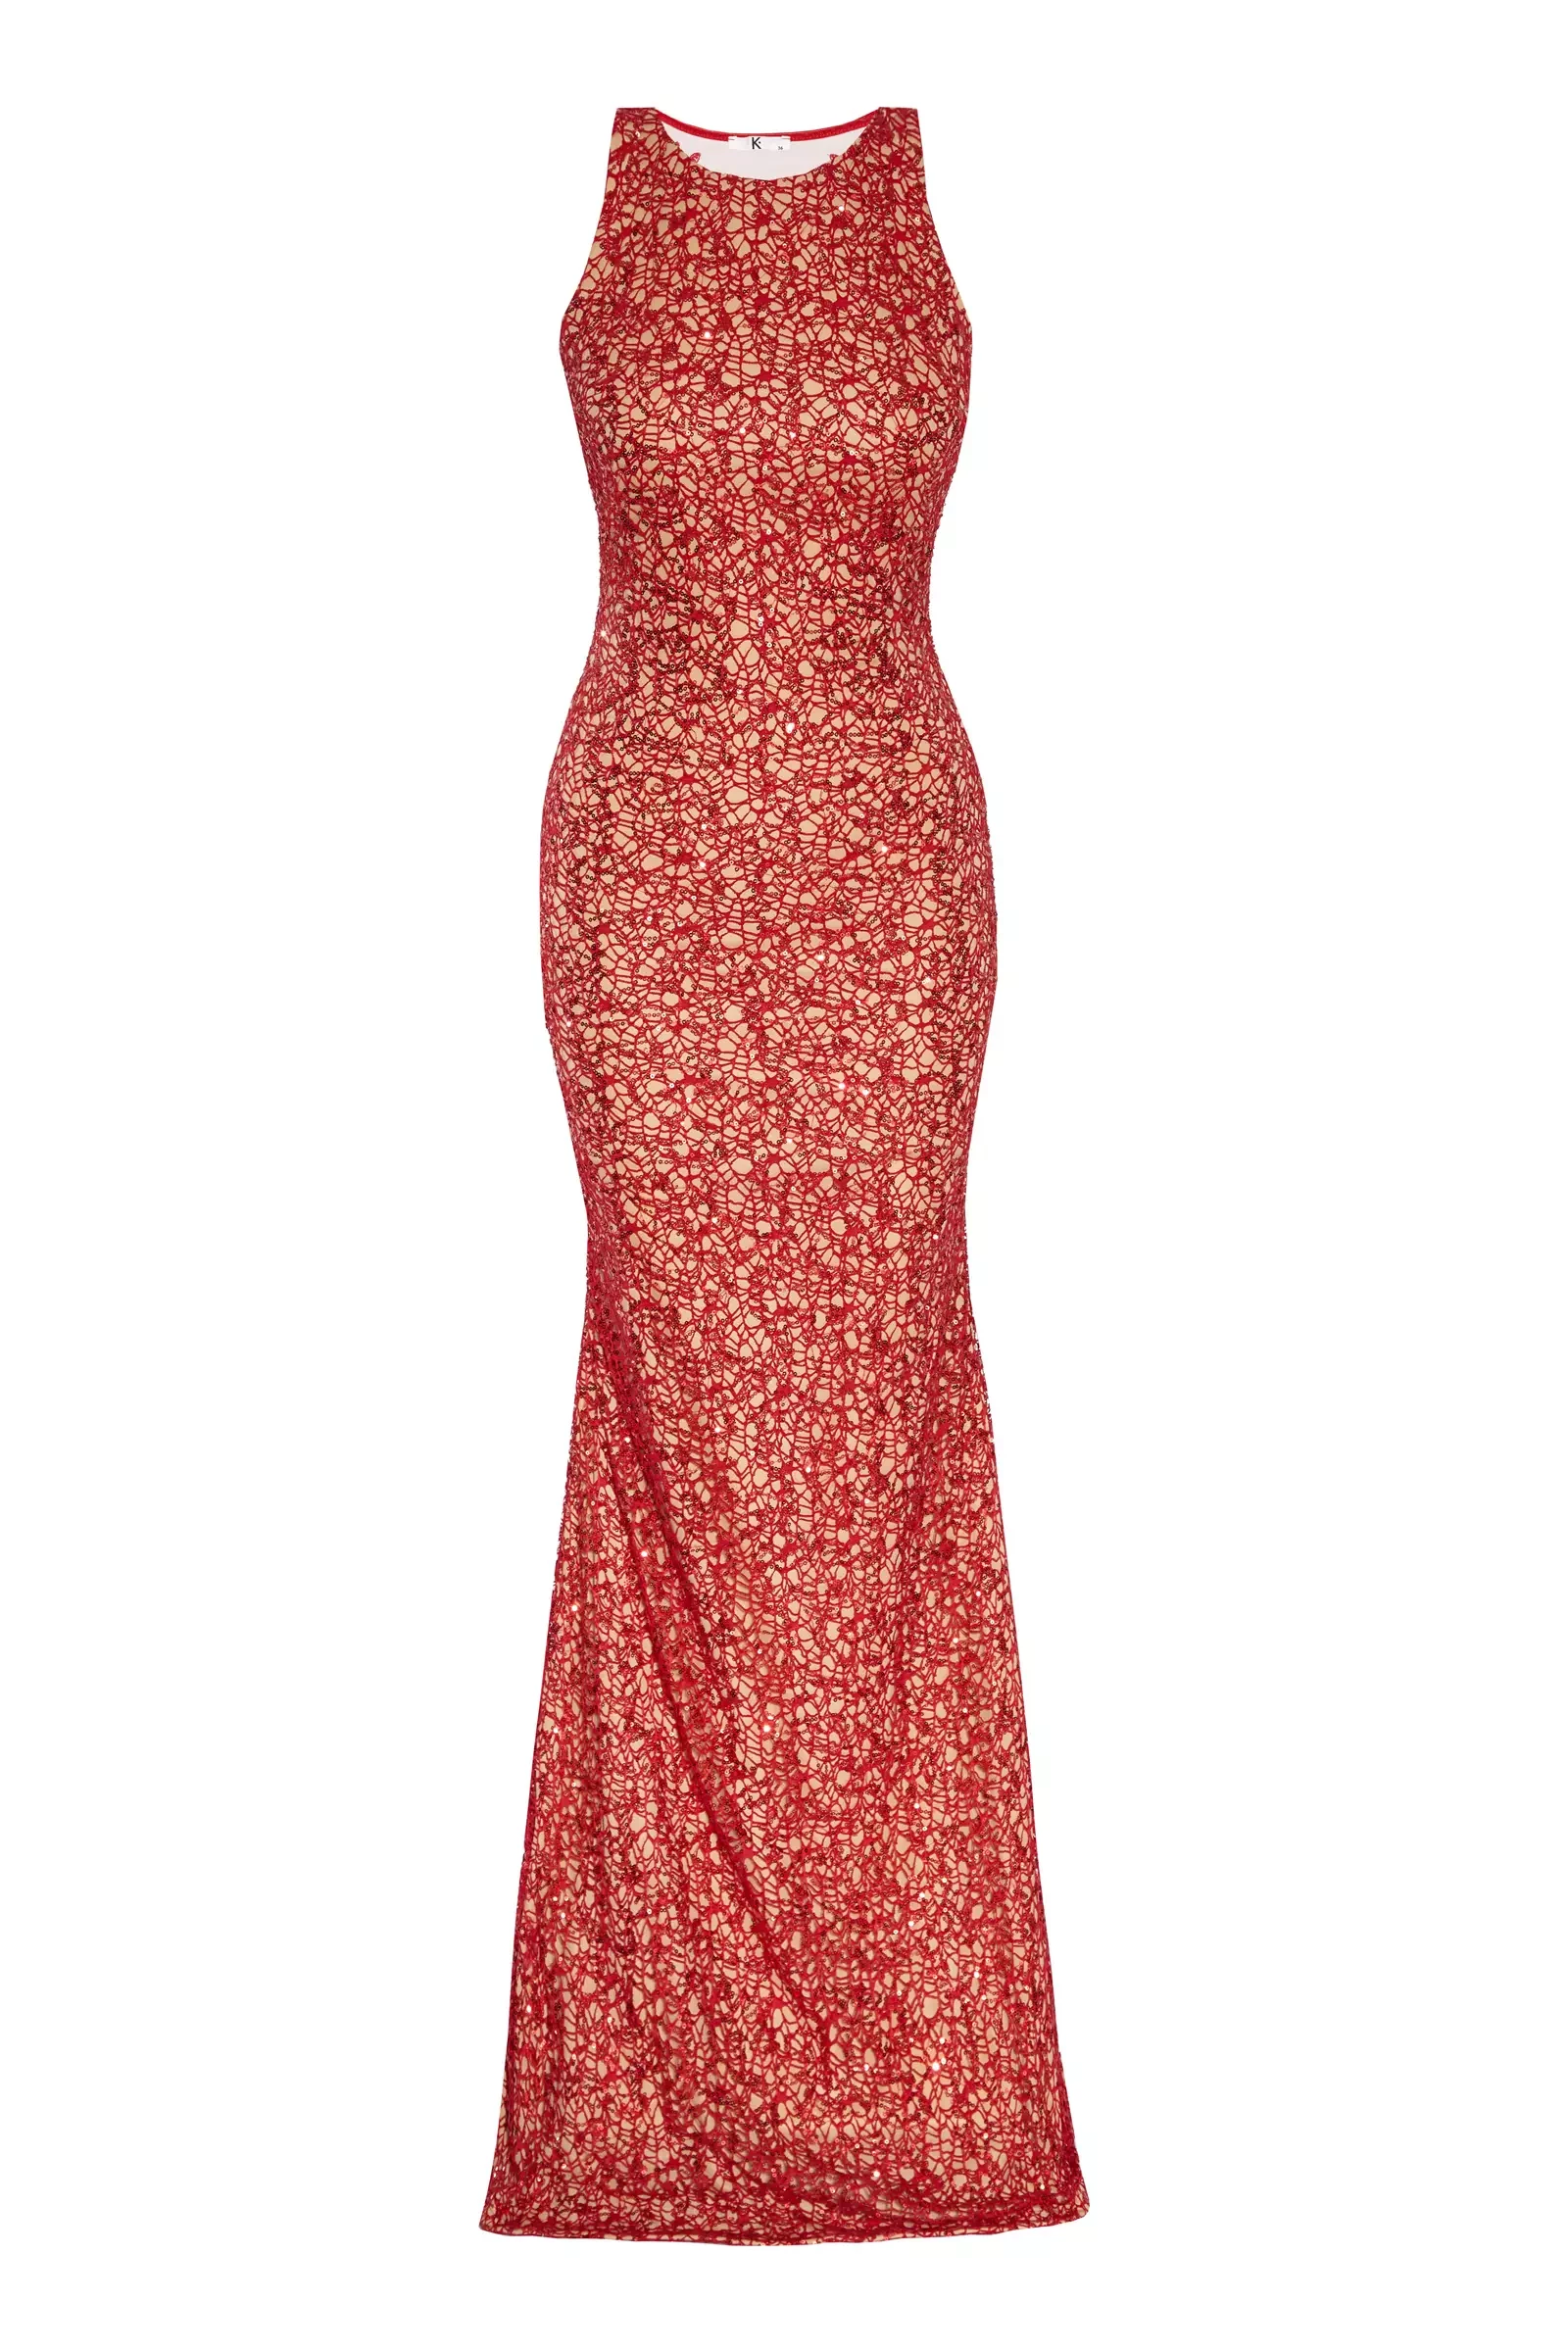 Red lace sleeveless maxi dress